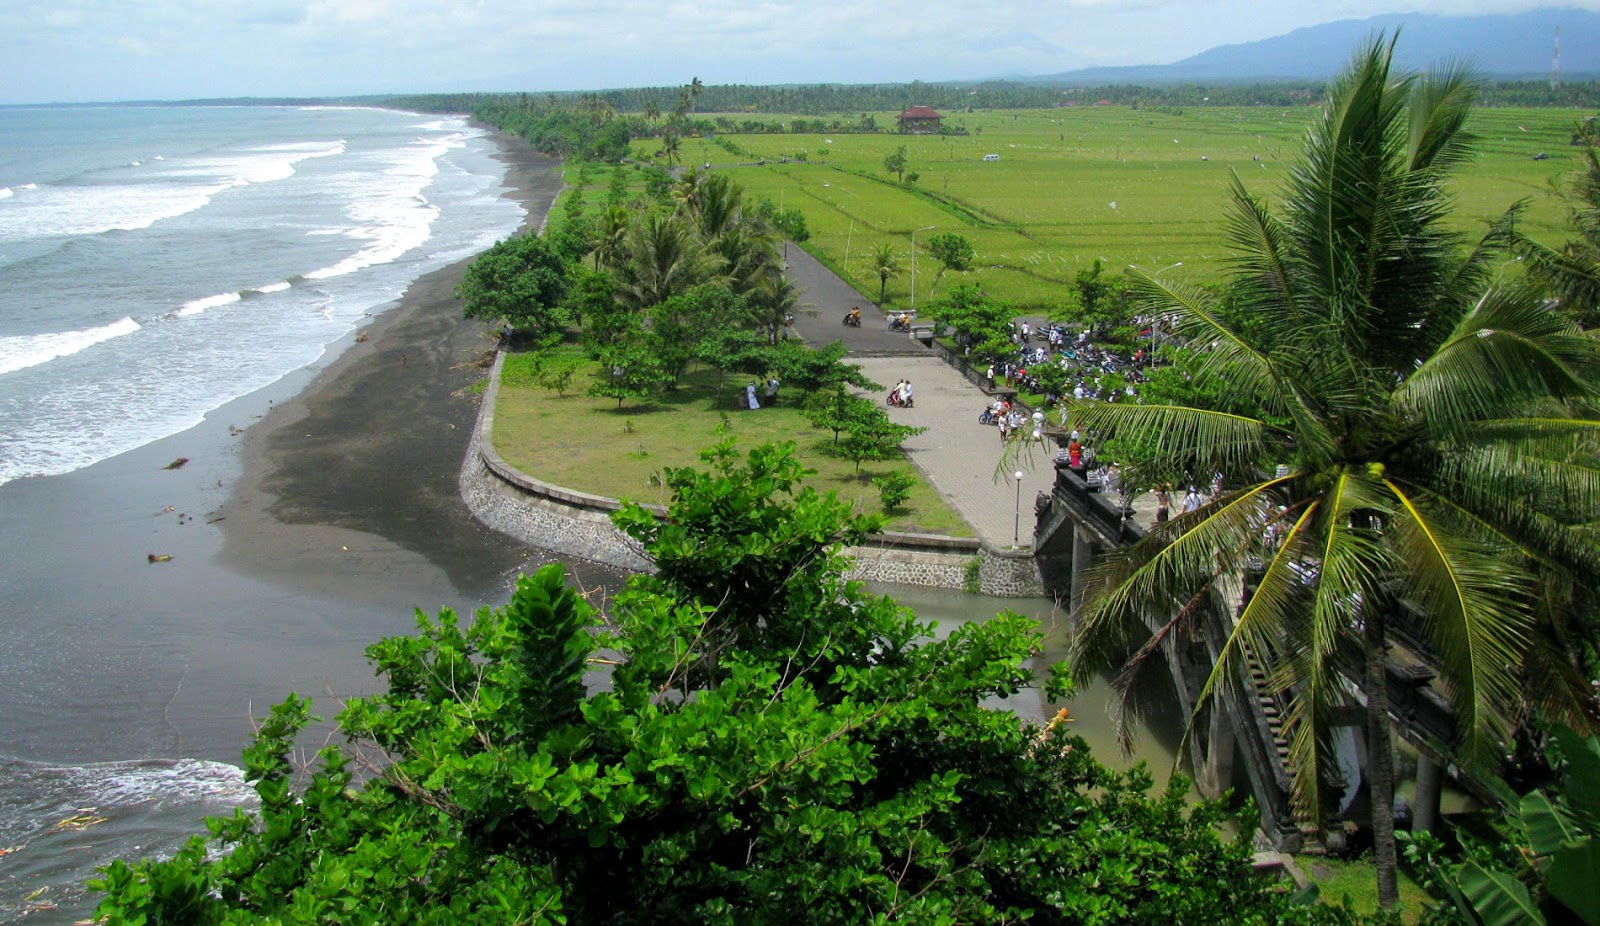 West Bali National Park